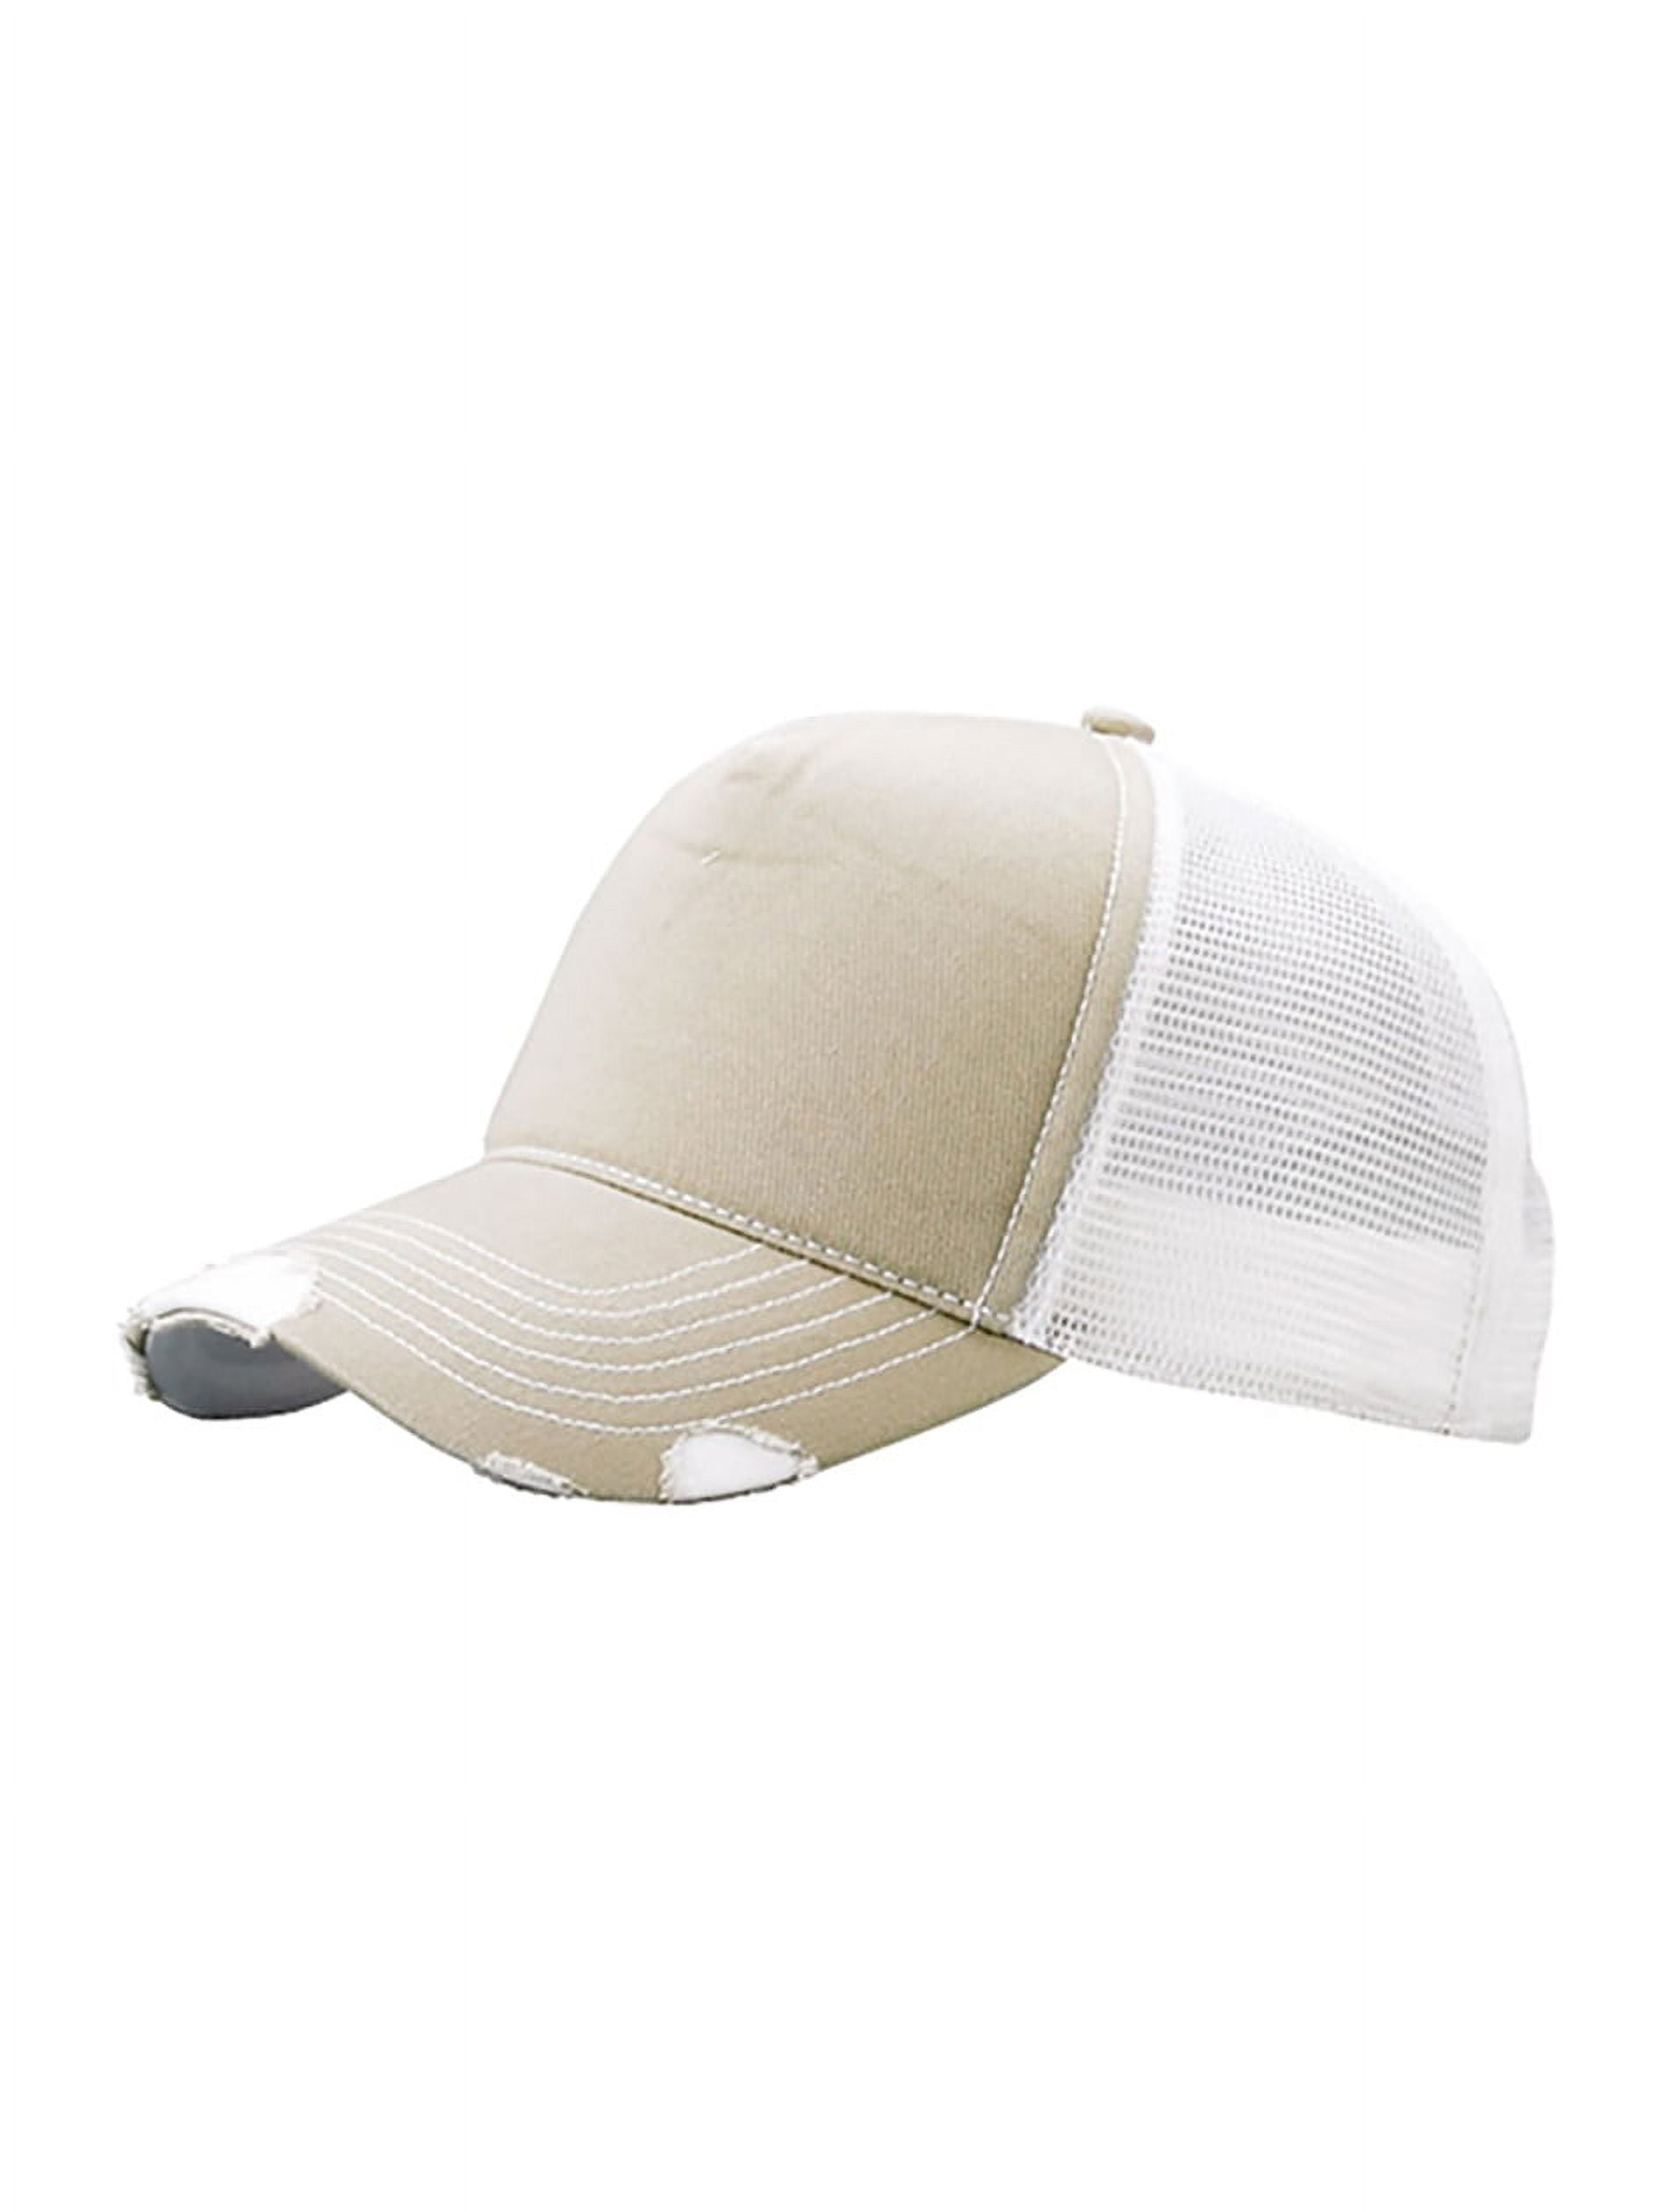 30pcs Hat Size Reducer, Trianu Foam Hat Sizing Tape, Filler Sizer Reducer Insert Adhesive for Hats Cap Sweatband, Black&White, Adult Unisex, Size: 11x